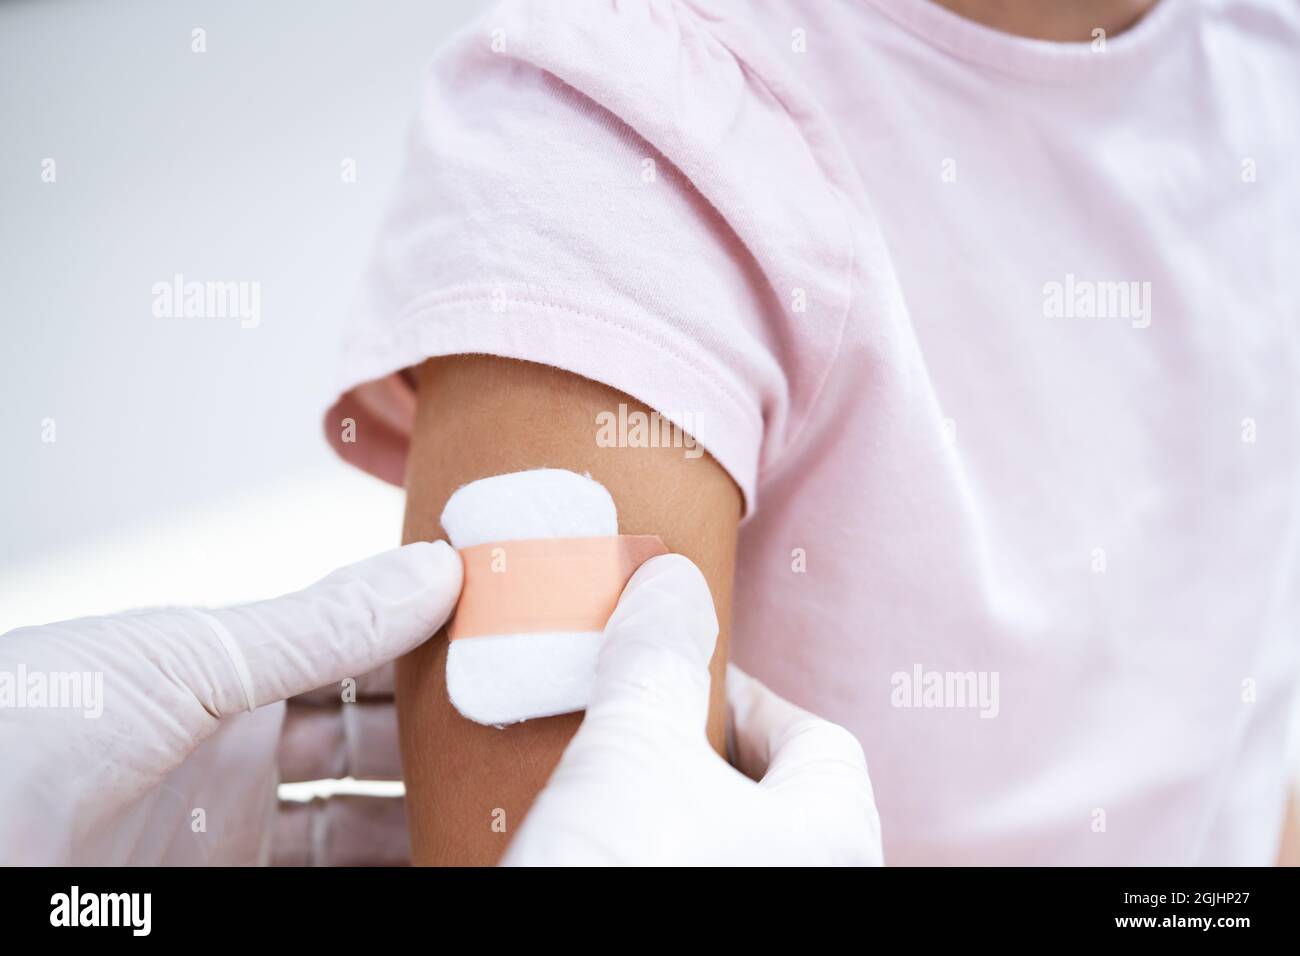 Kid Corona Virus Vaccine Injection. Covid-19 Child Immunization Stock Photo